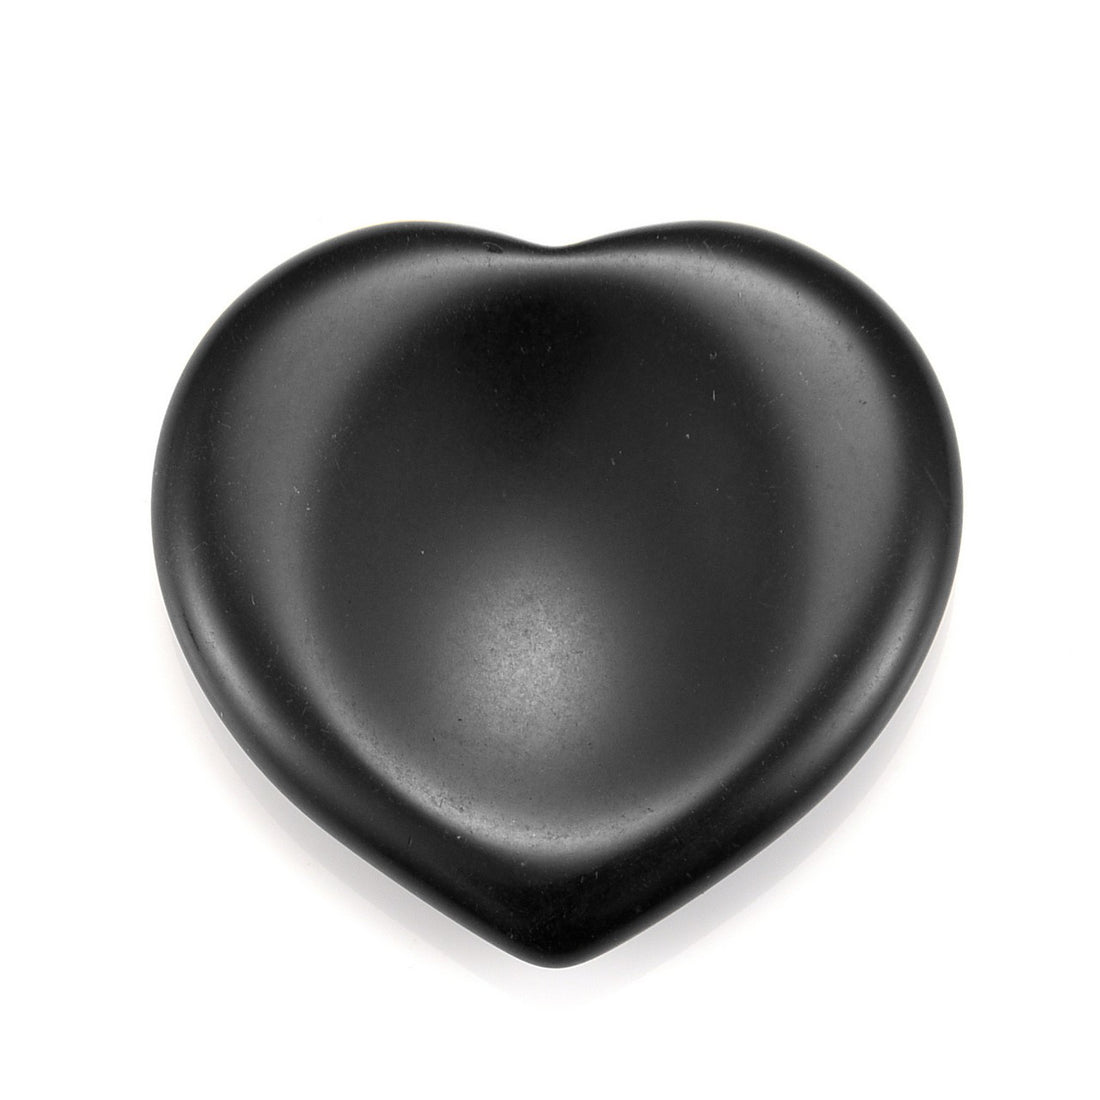 Healing Crystal Amethyst Heart Love Thumb Worry Stone | Jovivi